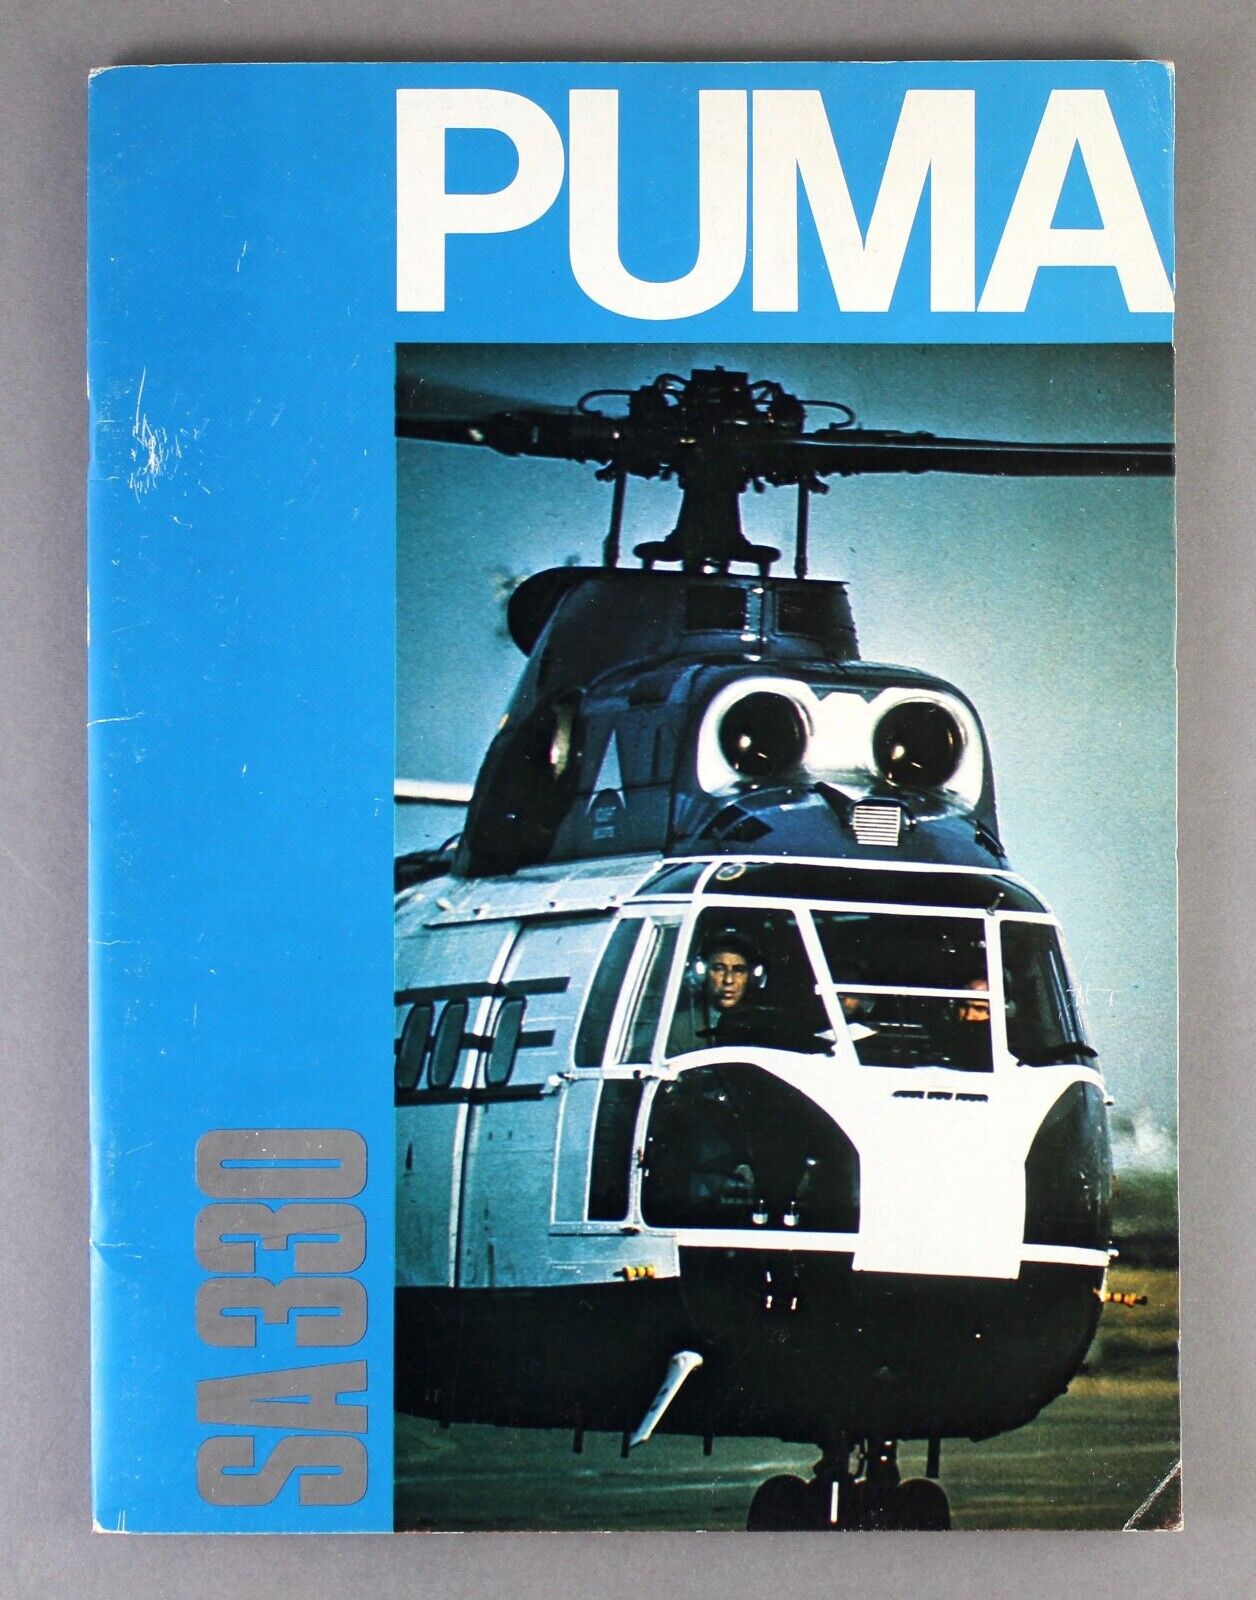 AEROSPATIALE PUMA SA 330 HELICOPTER MANUFACTURERS SALES BROCHURE 1971